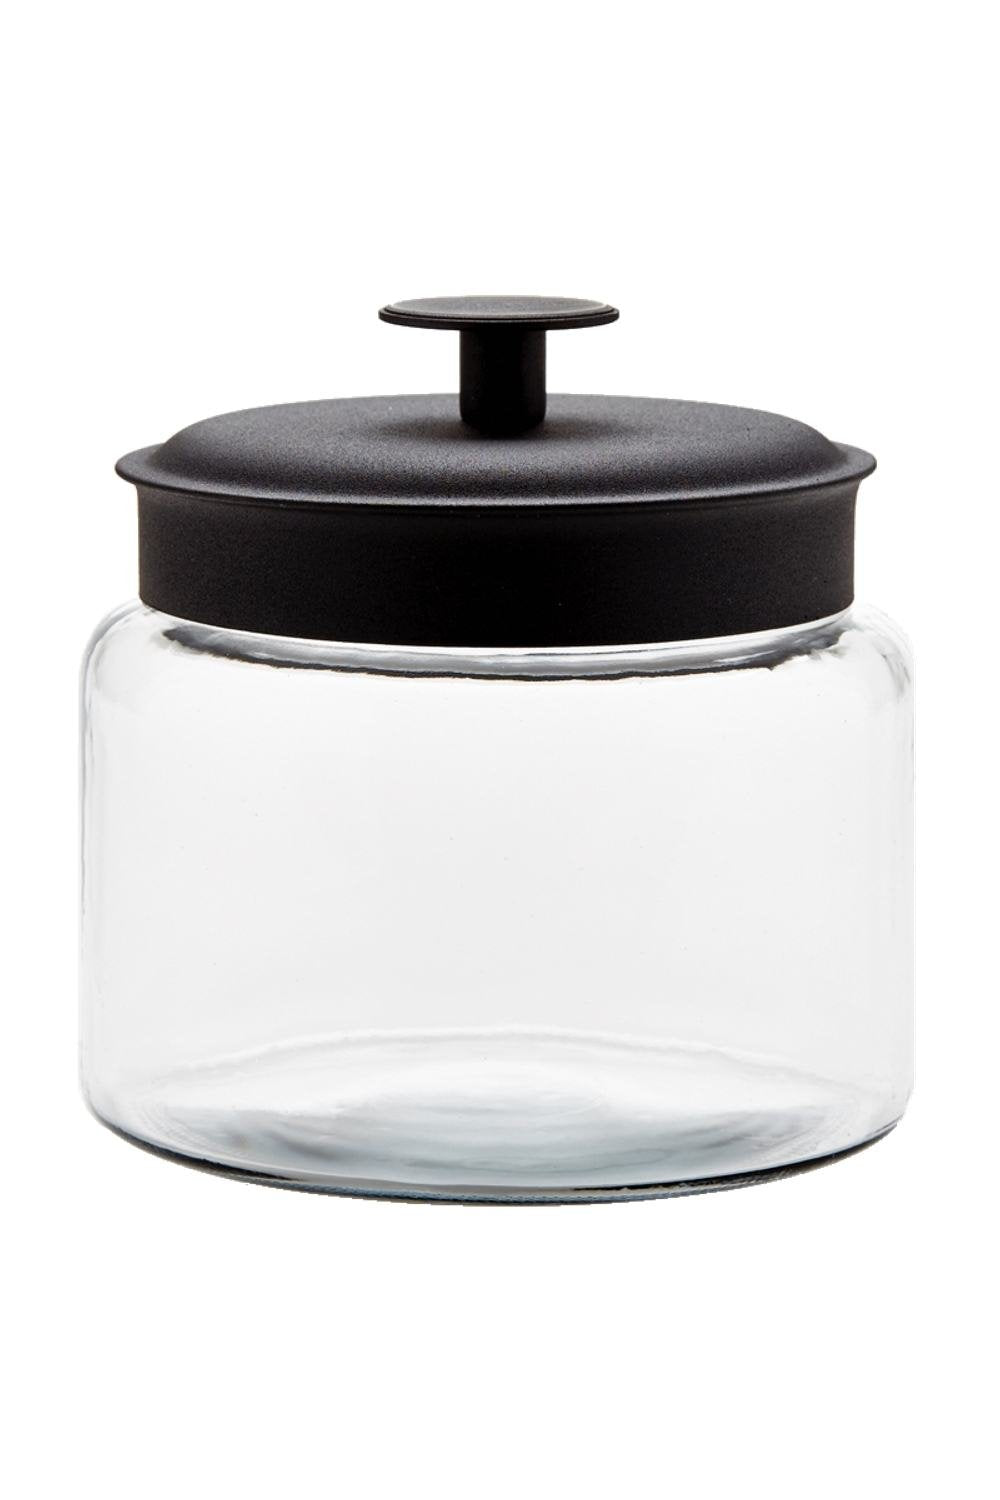 Anchor Hocking: Montana Jar with Black Lid (48 Oz)